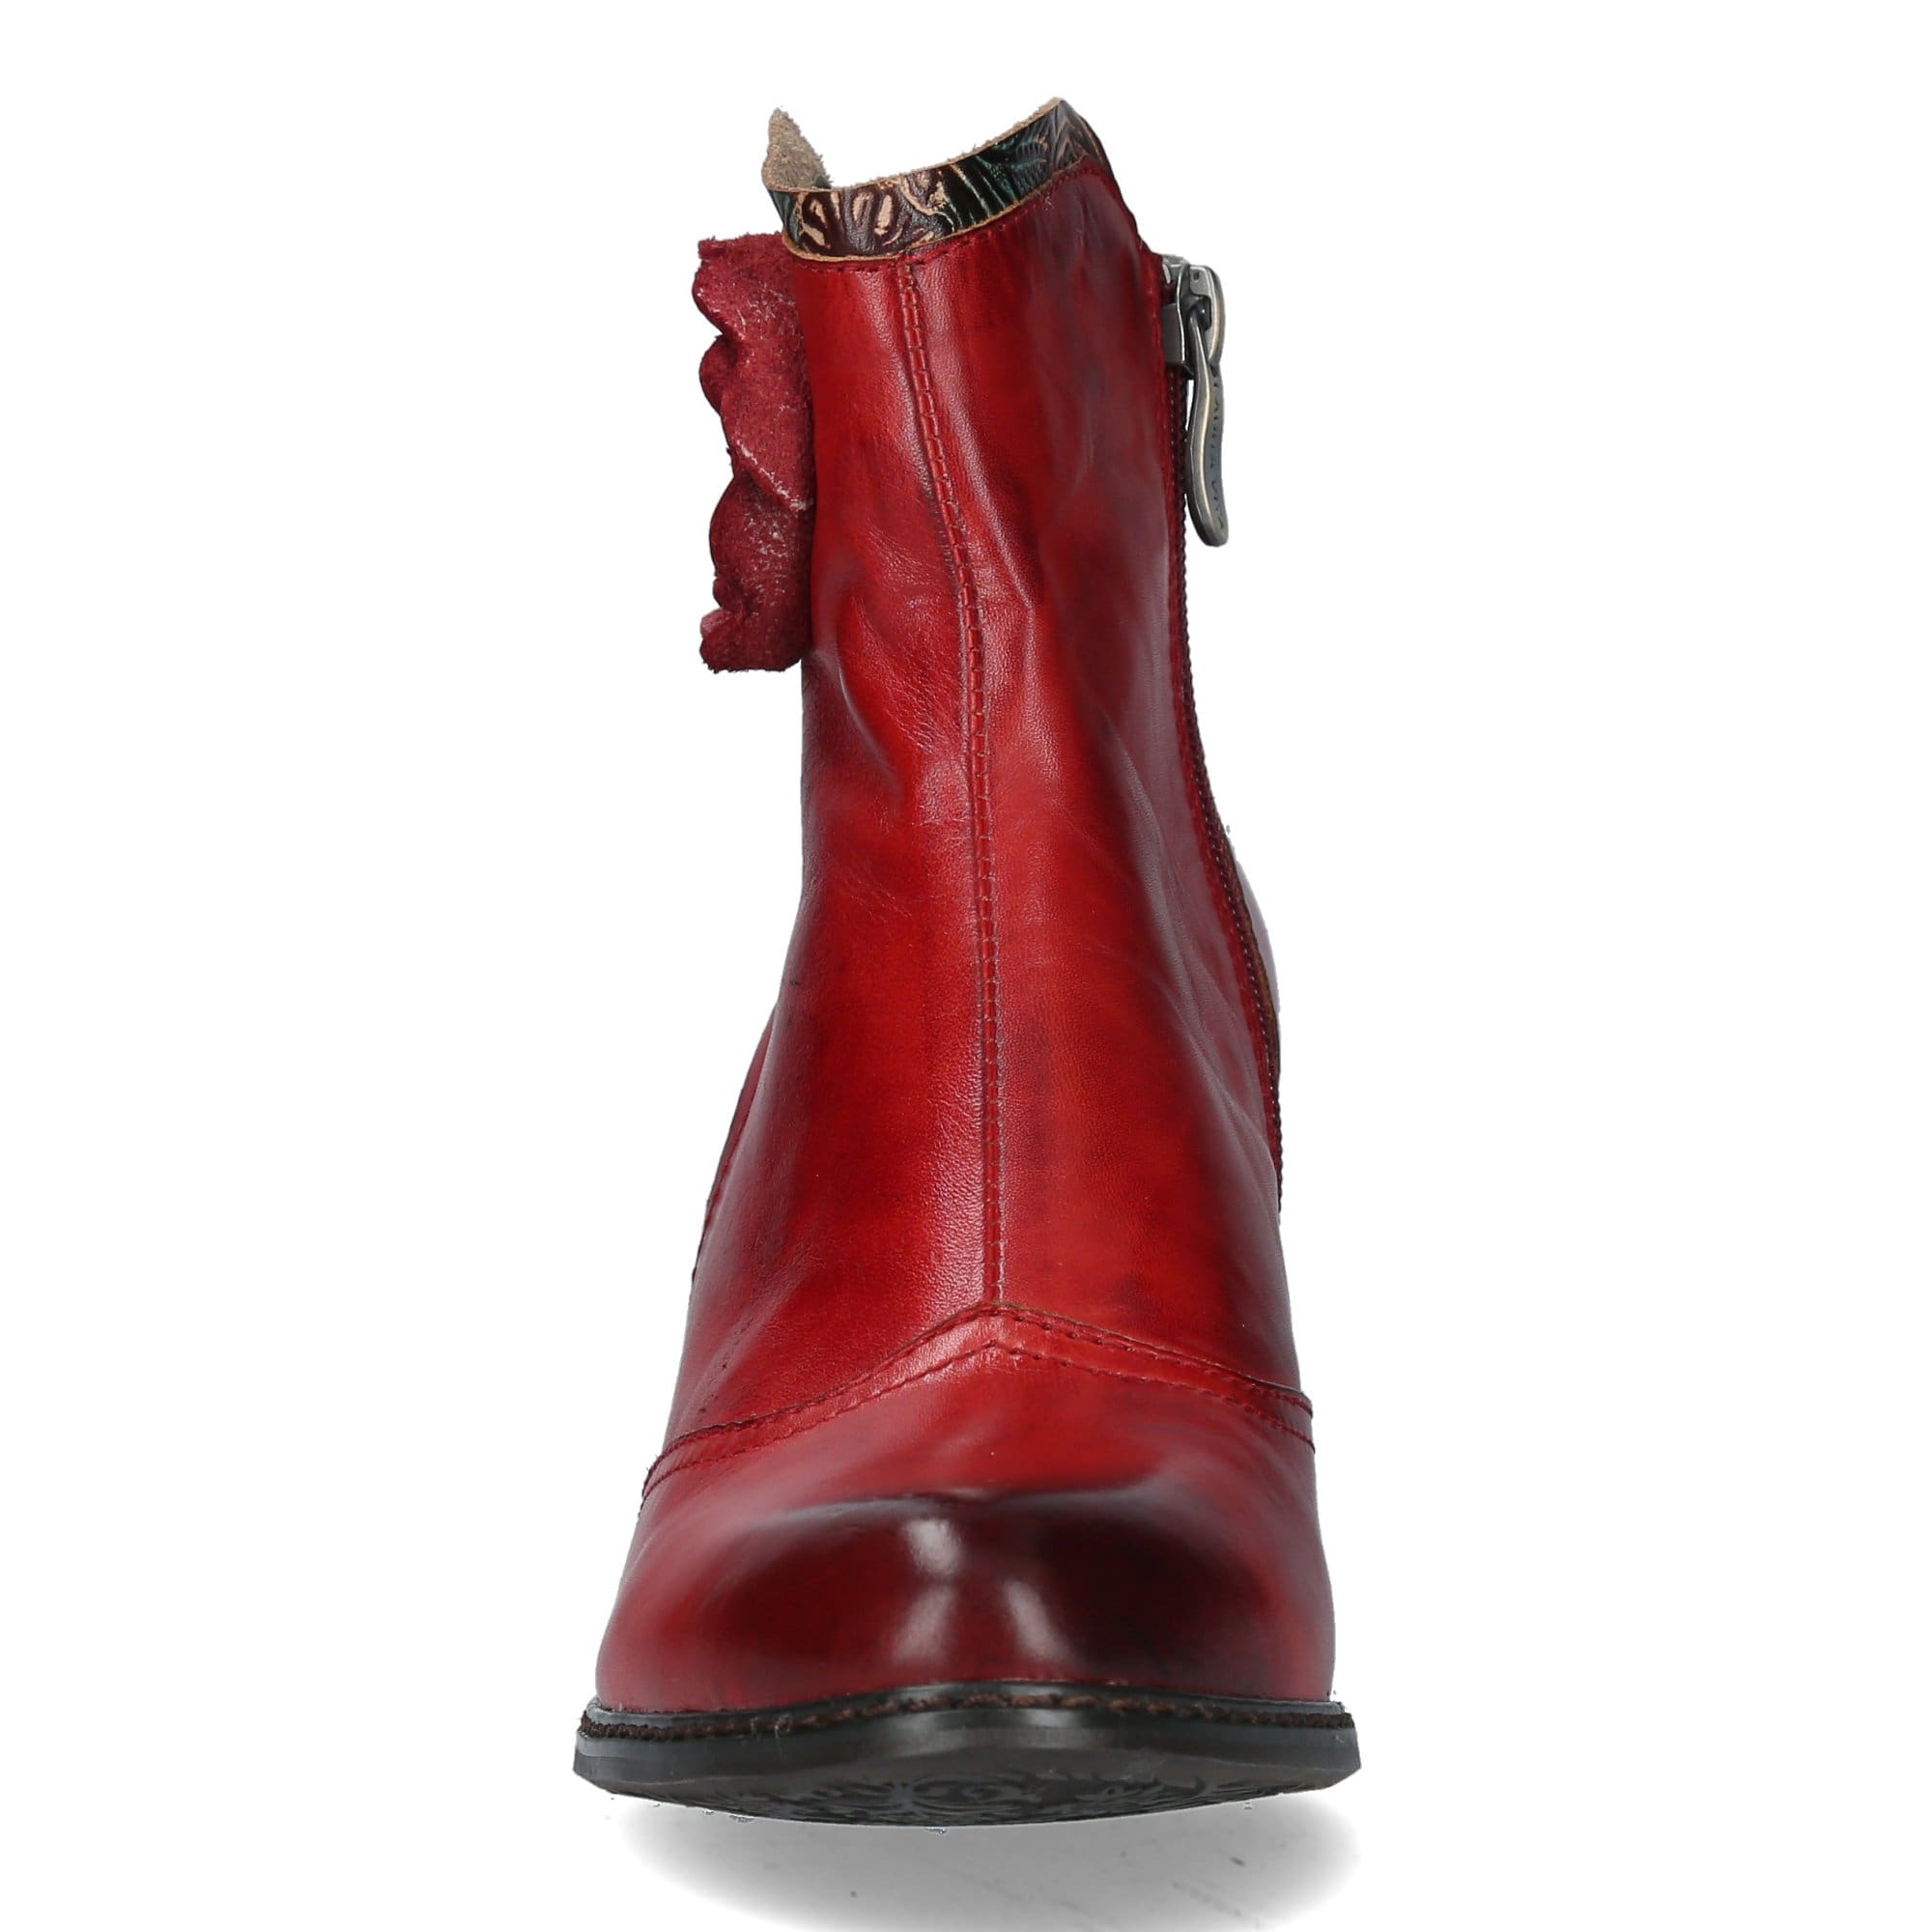 Shoe ALCIZEEO 2115 - Boots